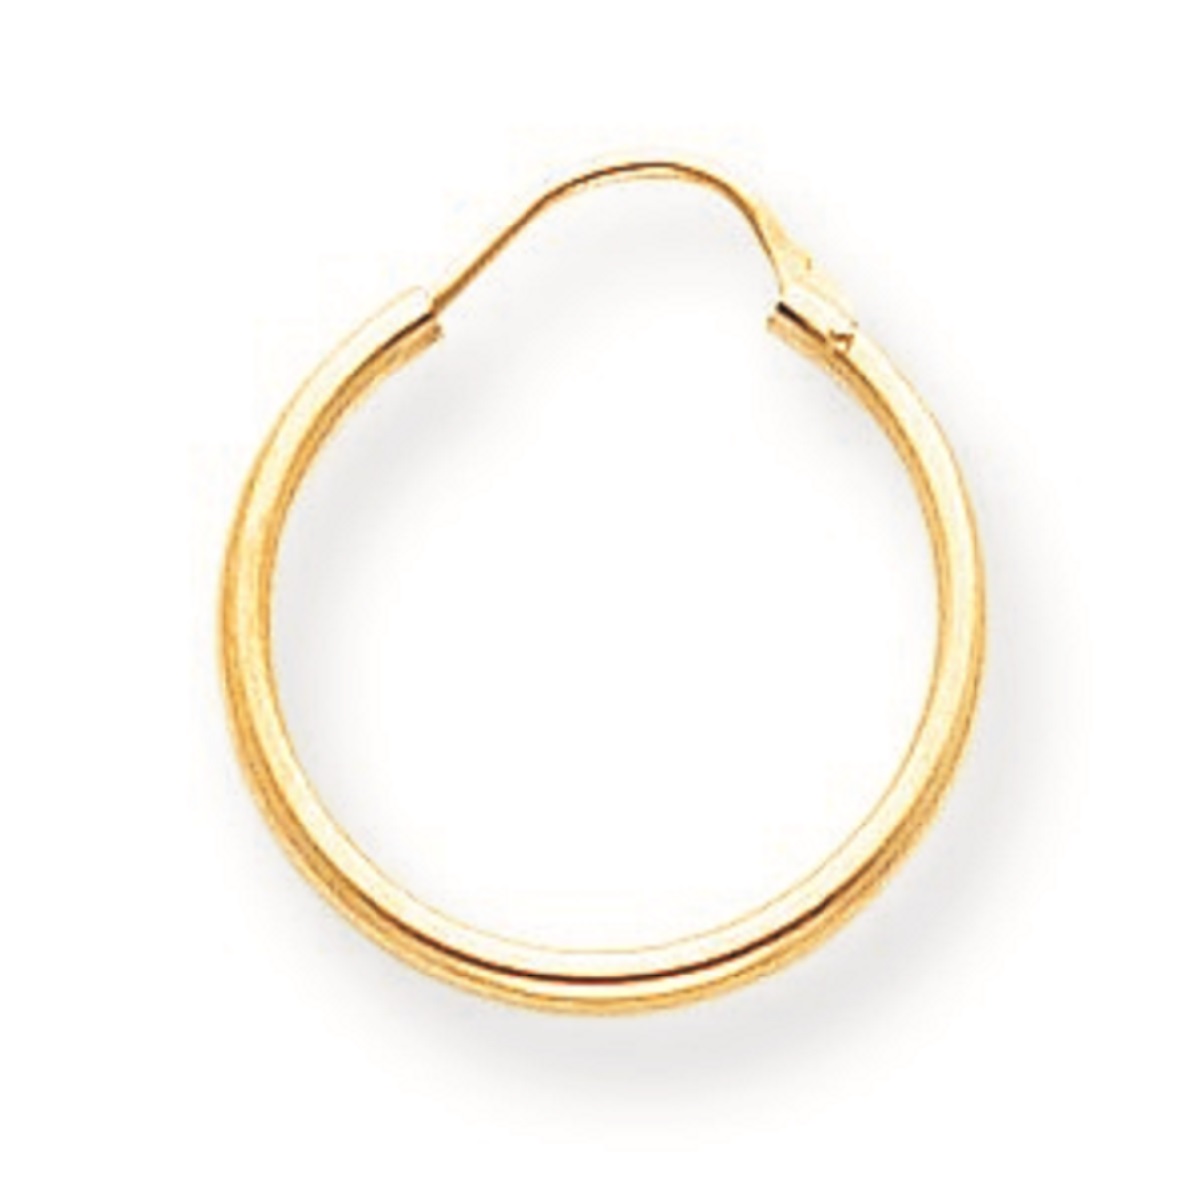 14k Yellow Gold Polished Hoop Earrings - Measures 15x15mm